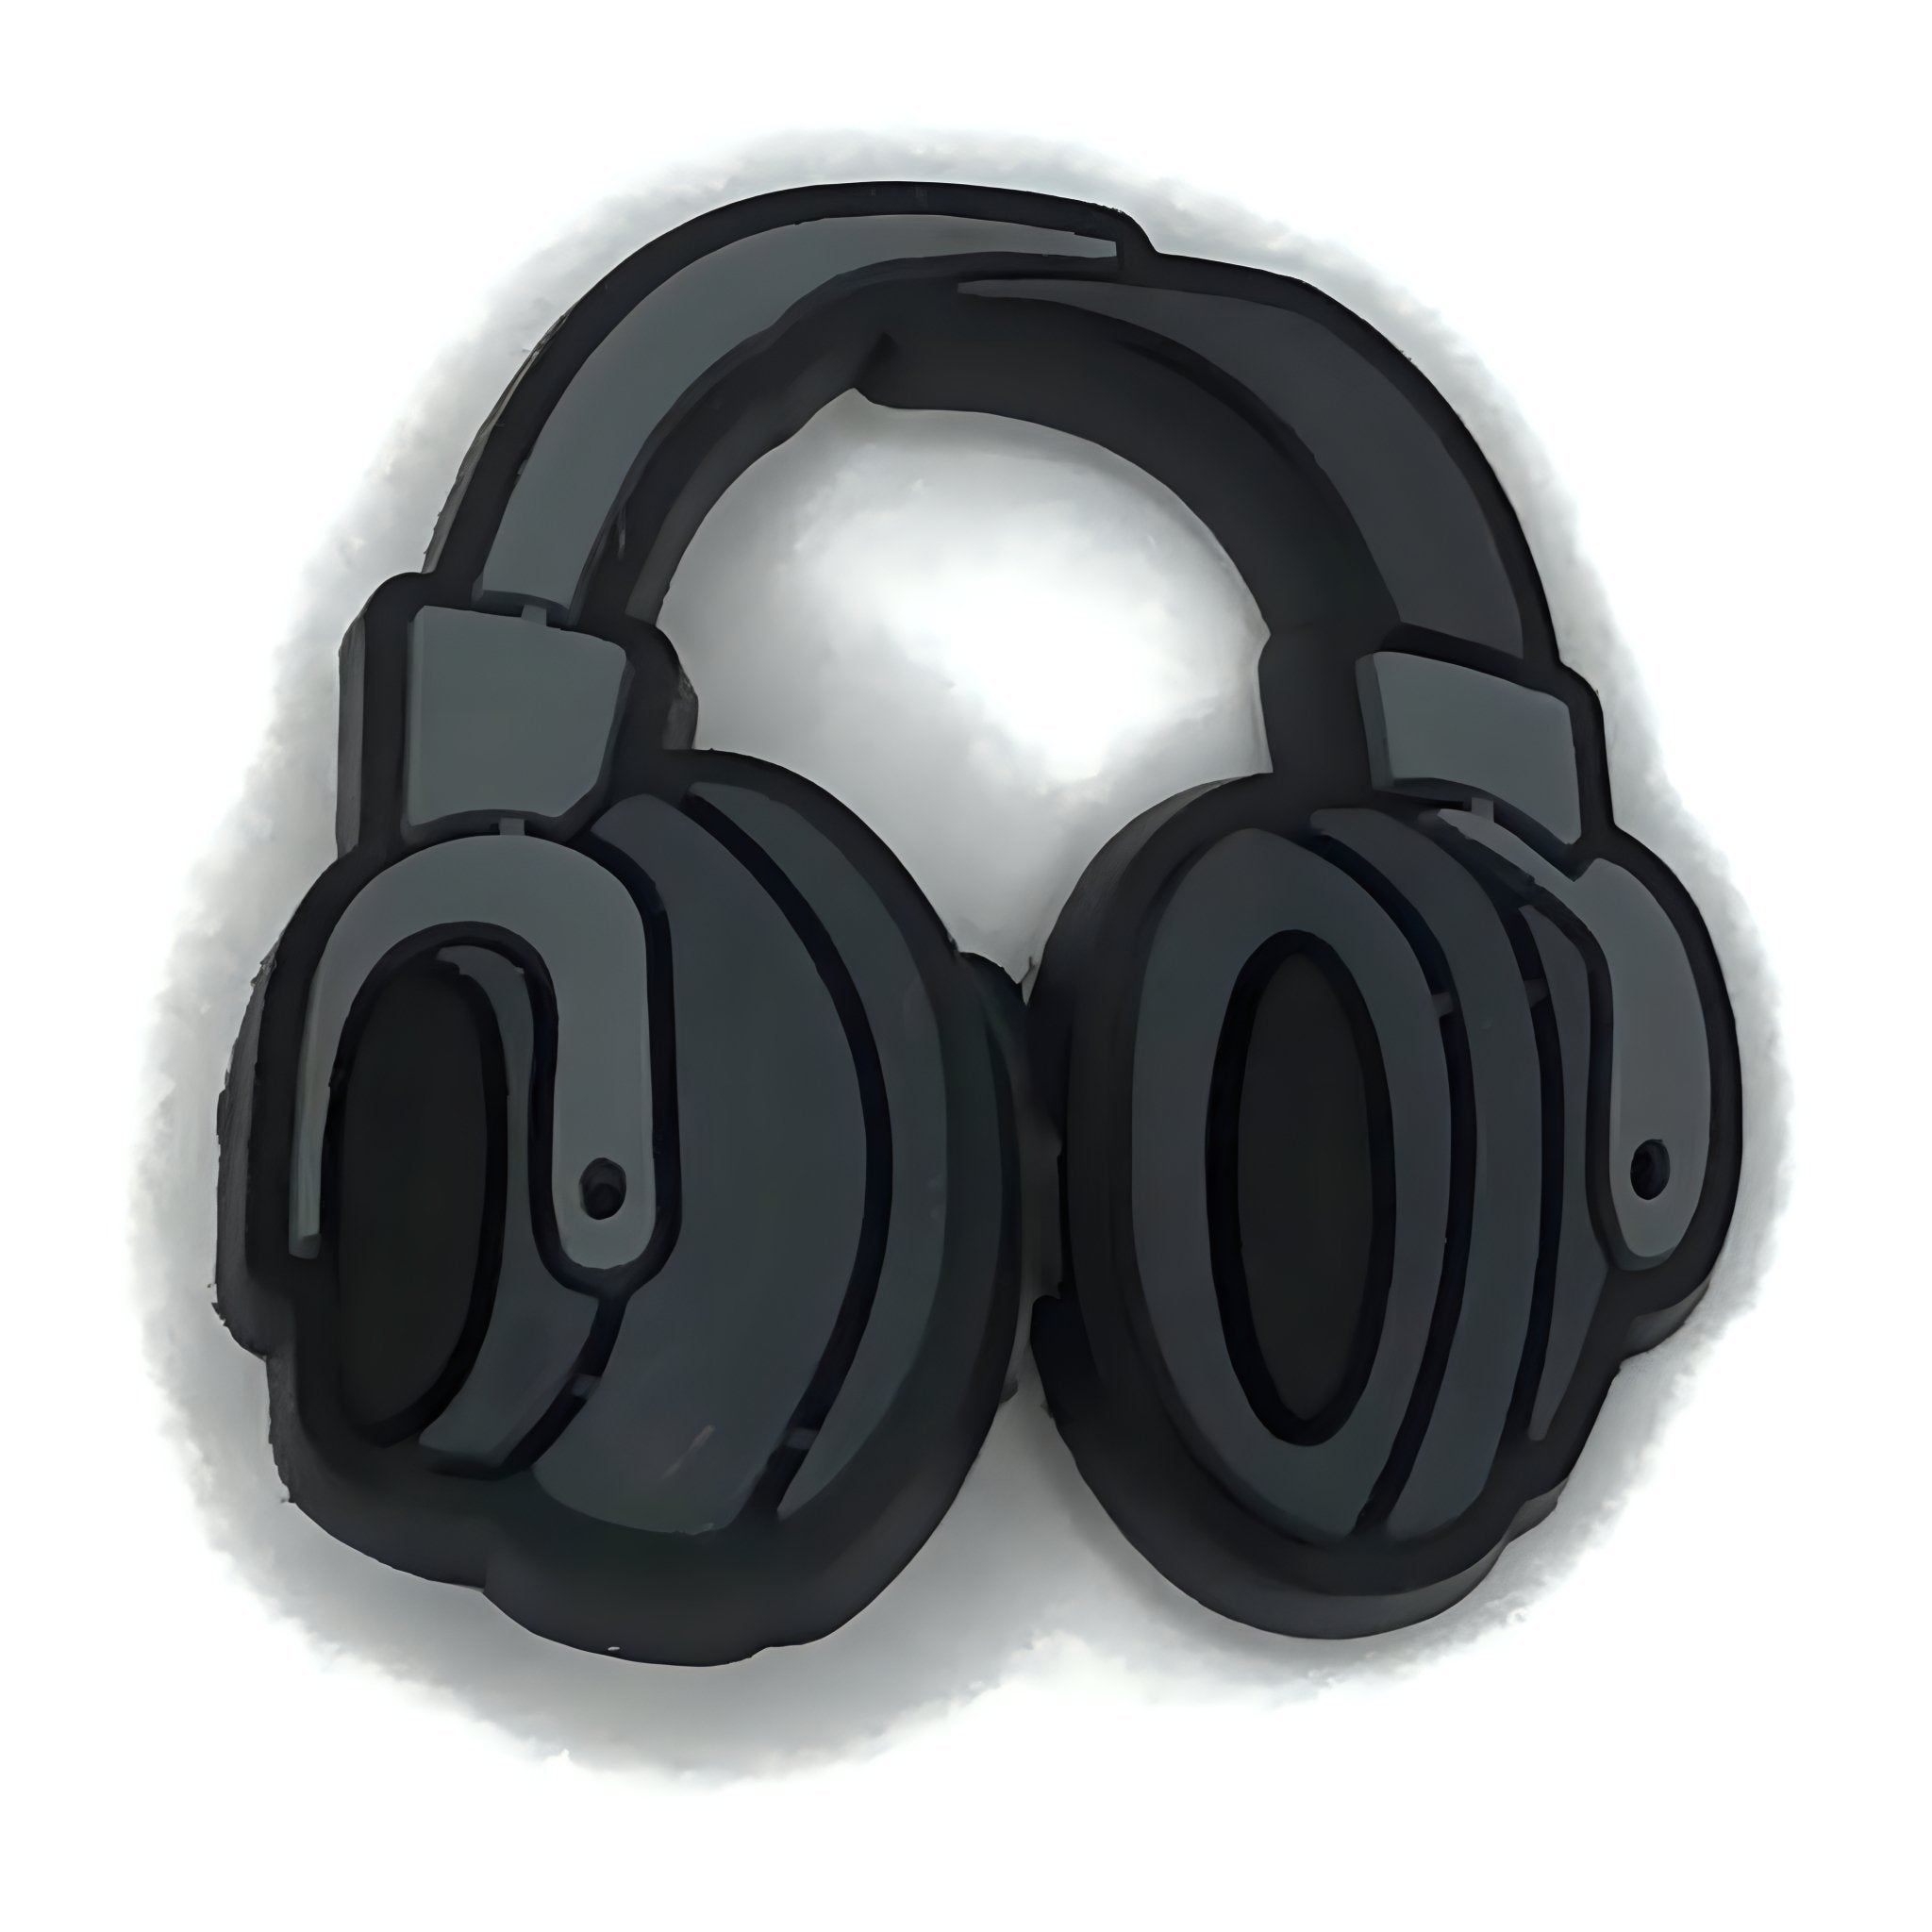 "Headphones Shoe Charm 🎧👟: Rock Your Style!" - Questsole